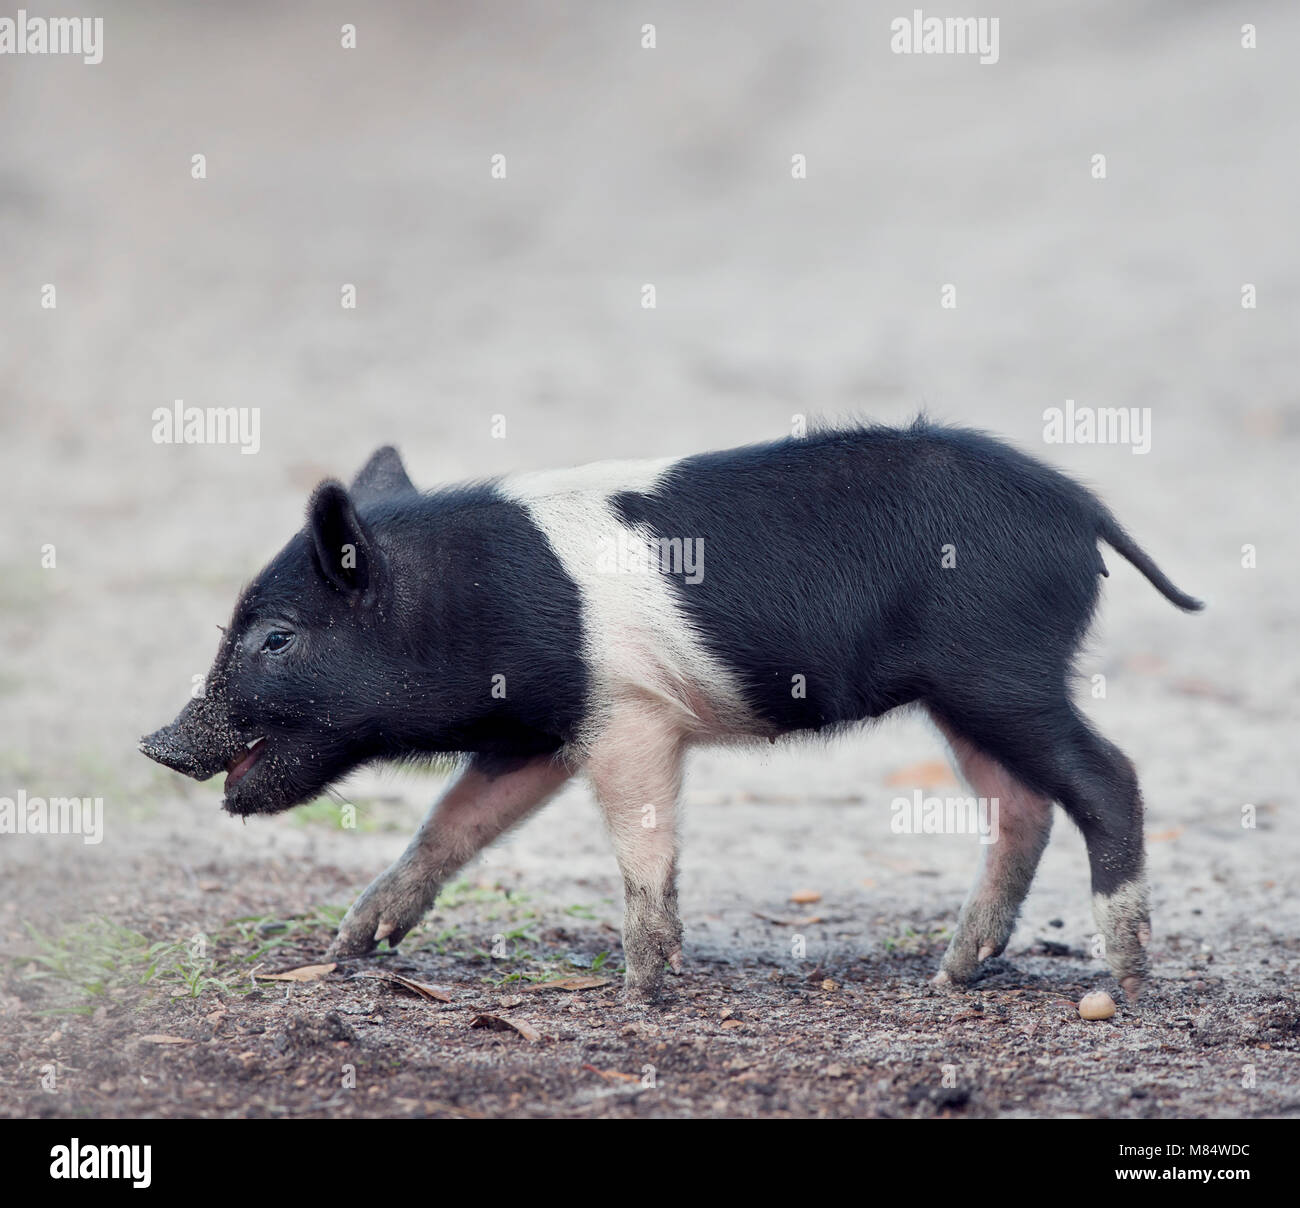 Wild piglet camminando in Florida zone umide Foto Stock